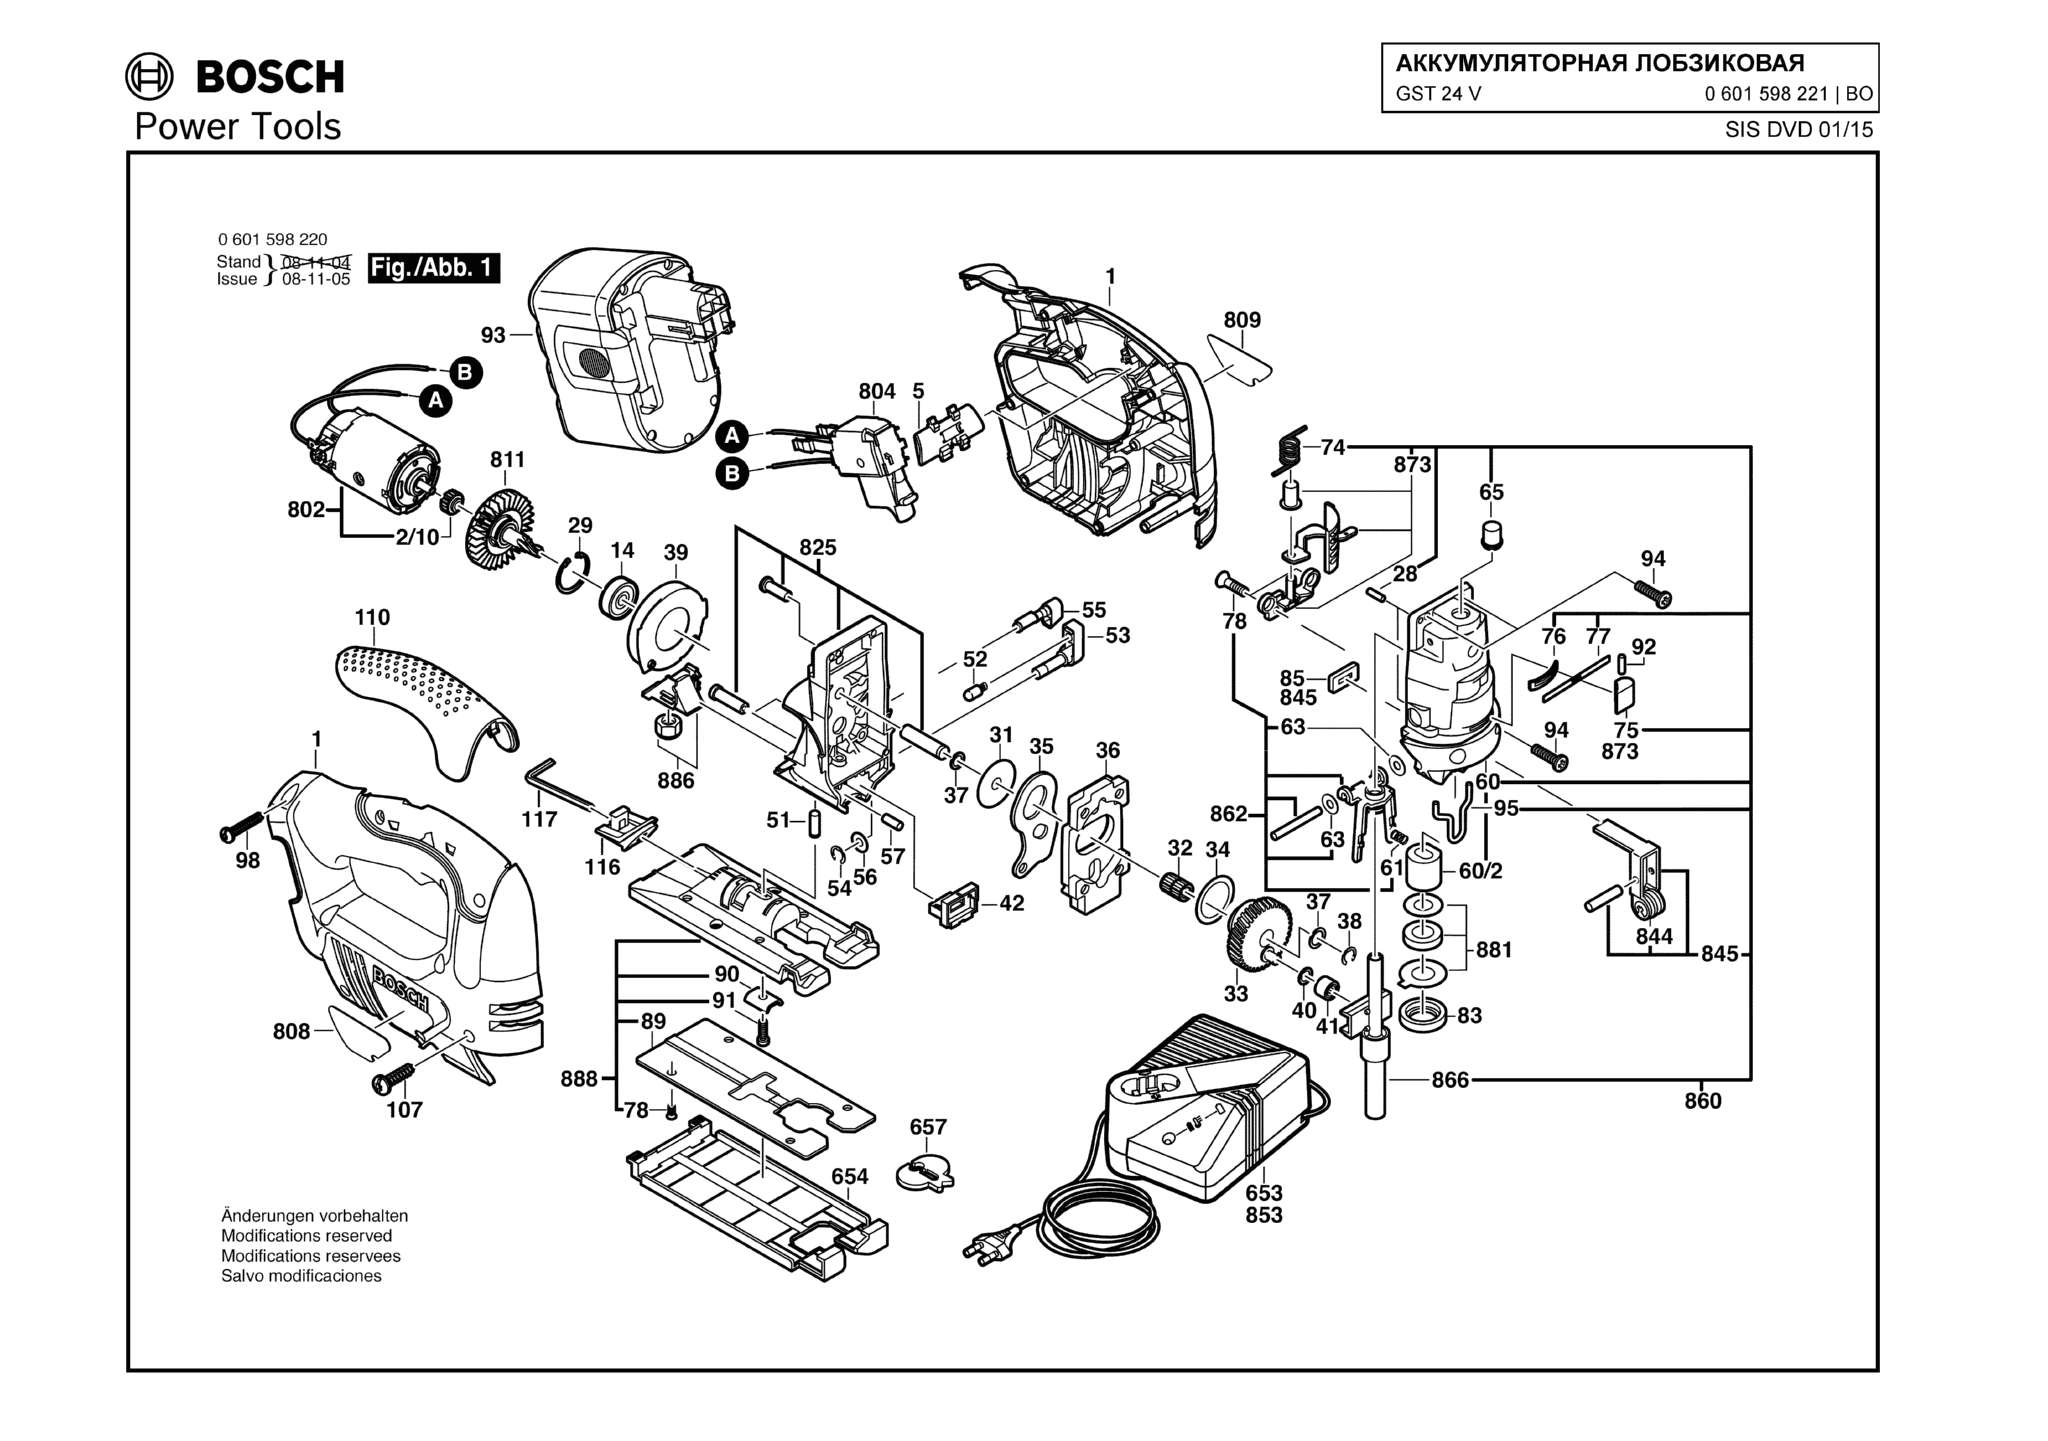 Запчасти, схема и деталировка Bosch GST 24 V (ТИП 0601598221)